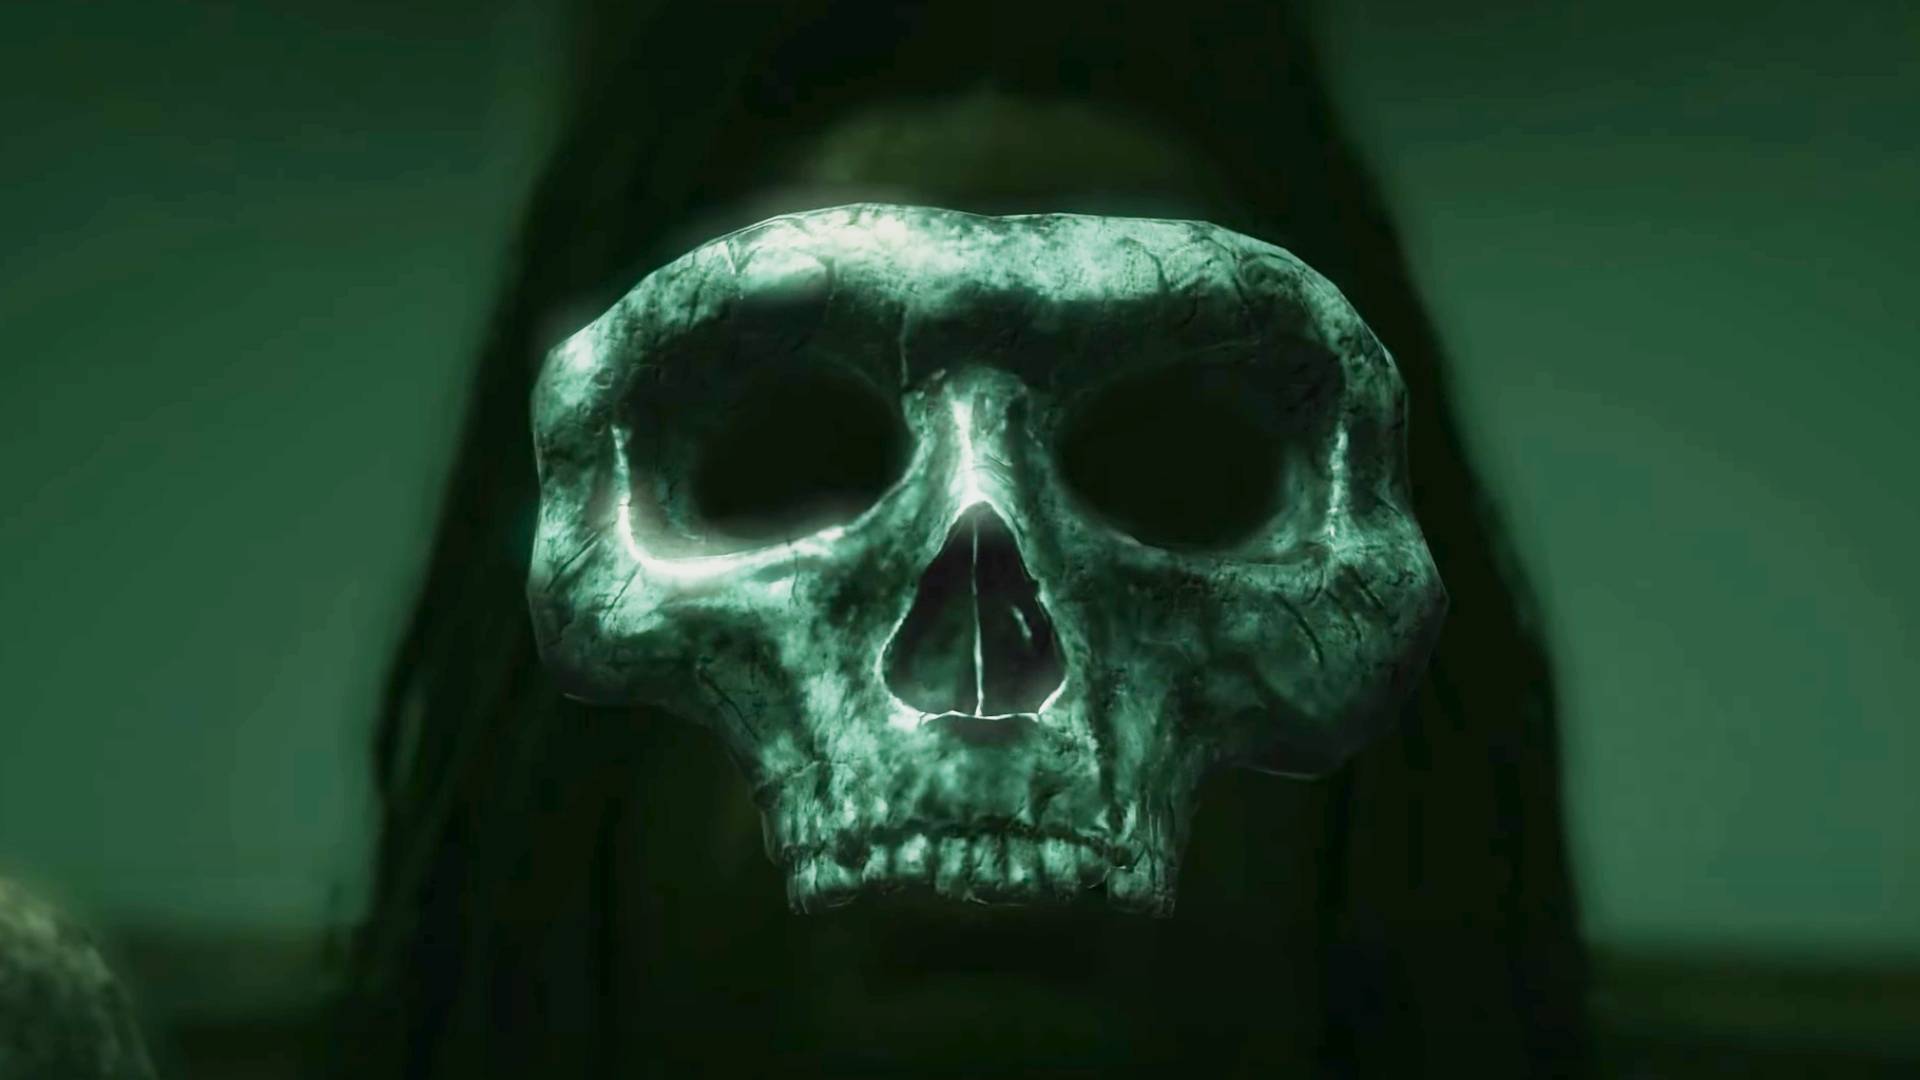 Skull and Bones: December Closed Beta Trailer 